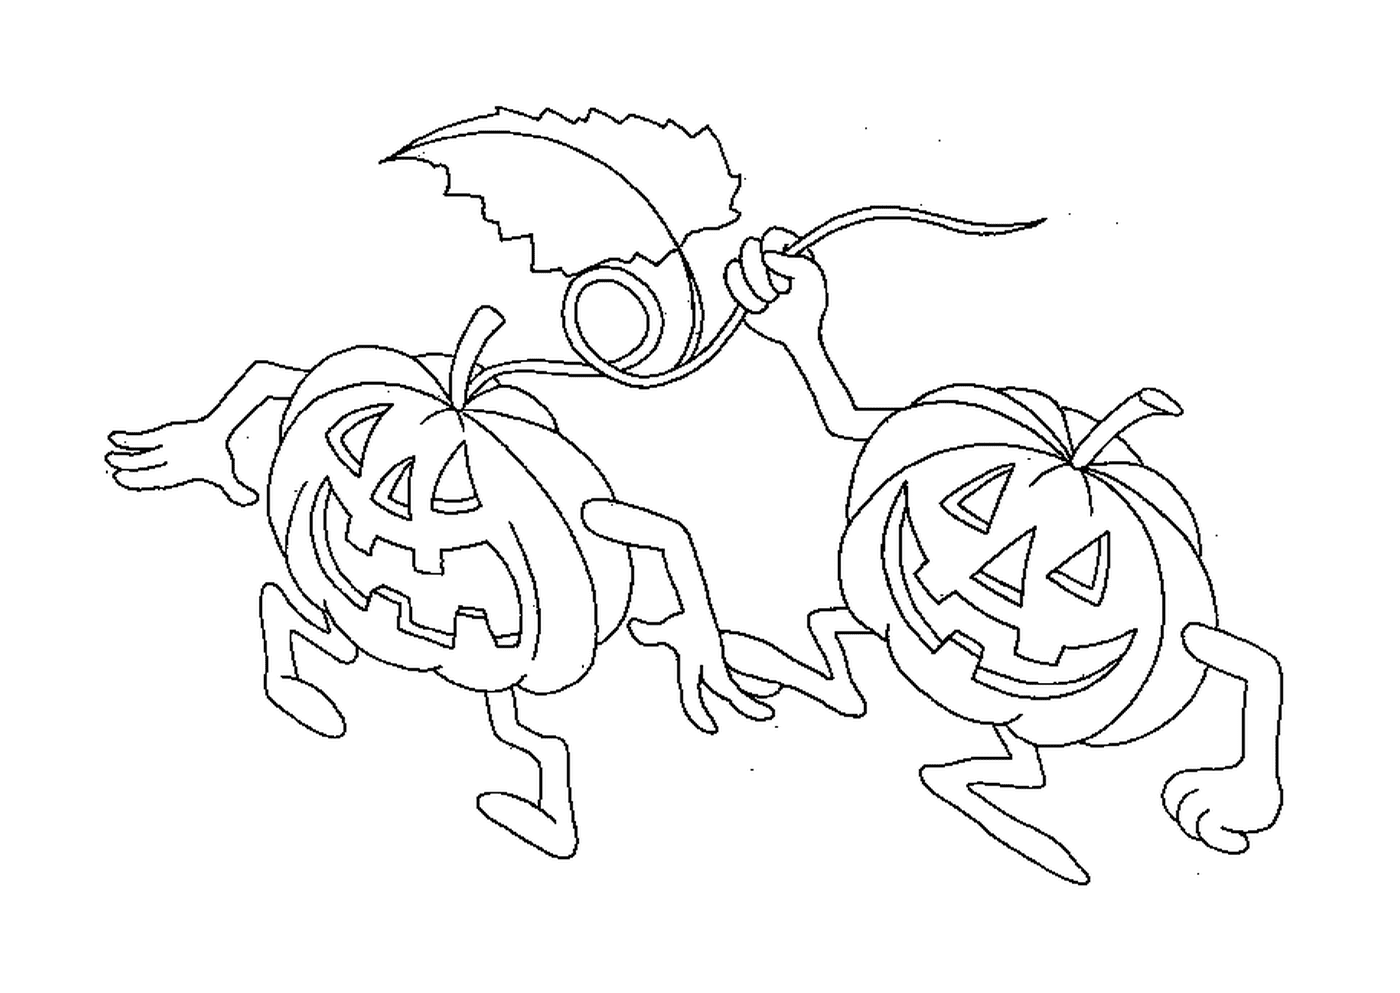  Two pumpkins walking around 